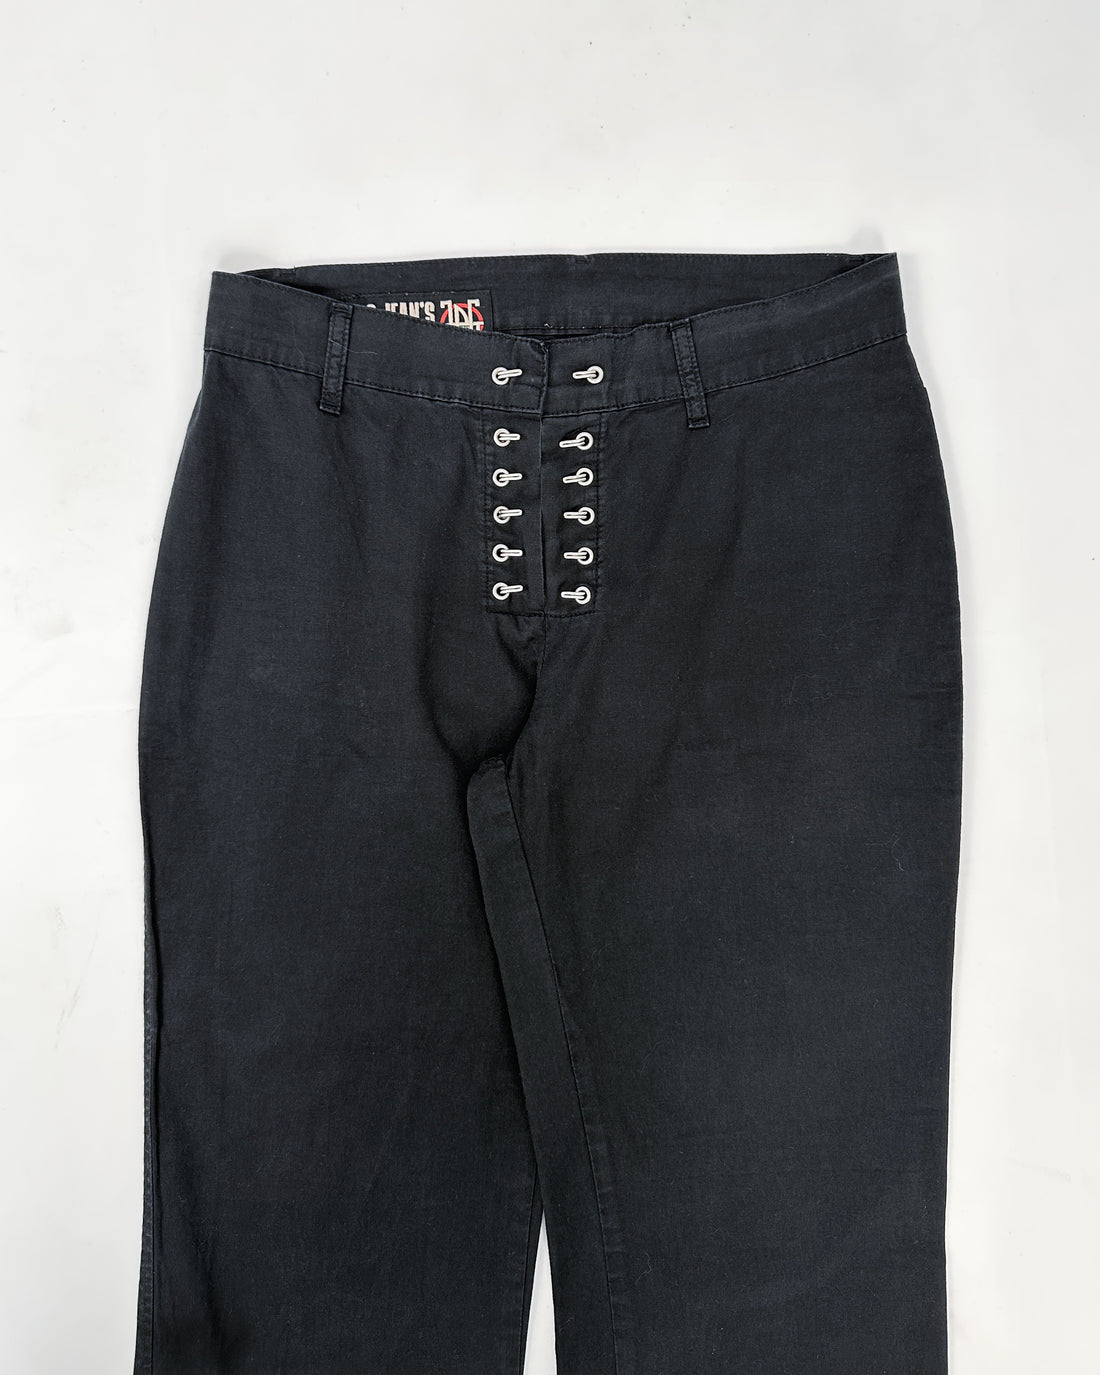 Jean Paul Gaultier Black Fastener Pants 2000's